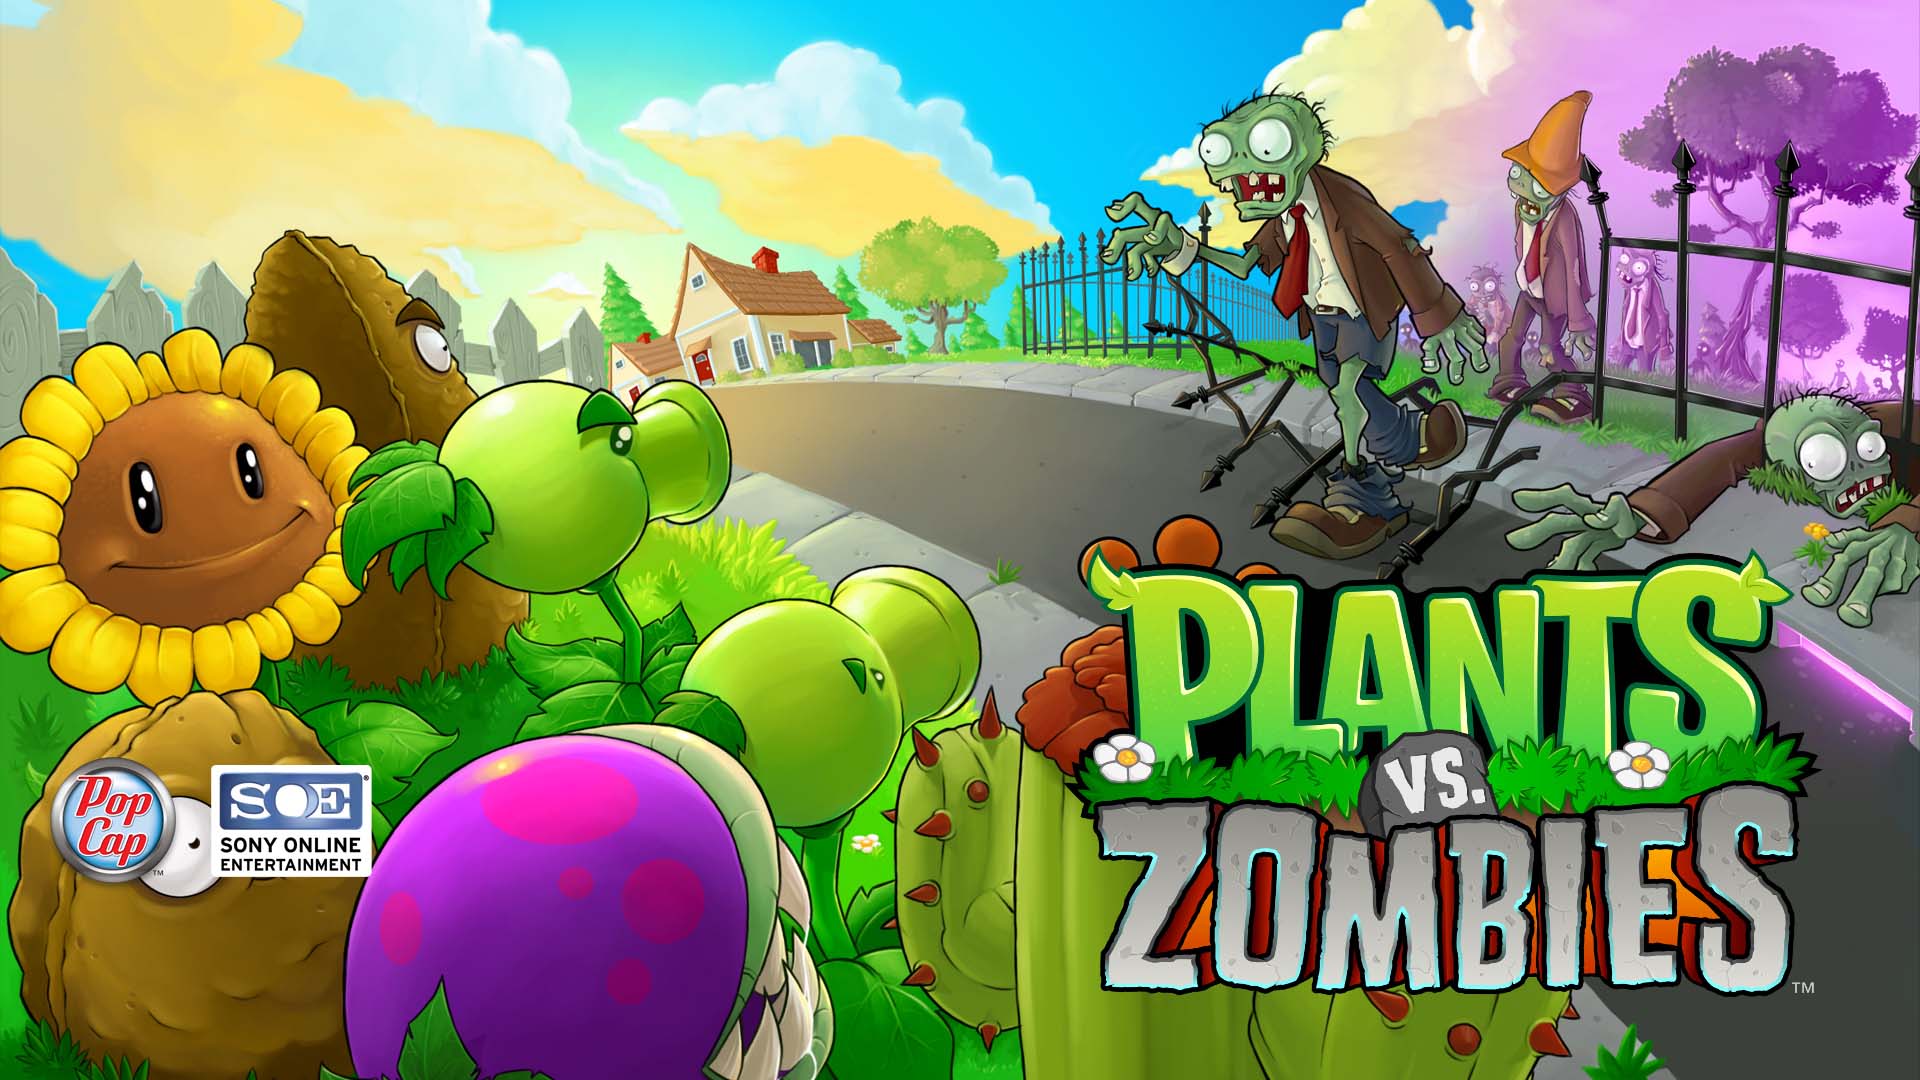 pflanzen gegen zombies wallpaper,action adventure spiel,animierter cartoon,computerspiel,karikatur,spiele